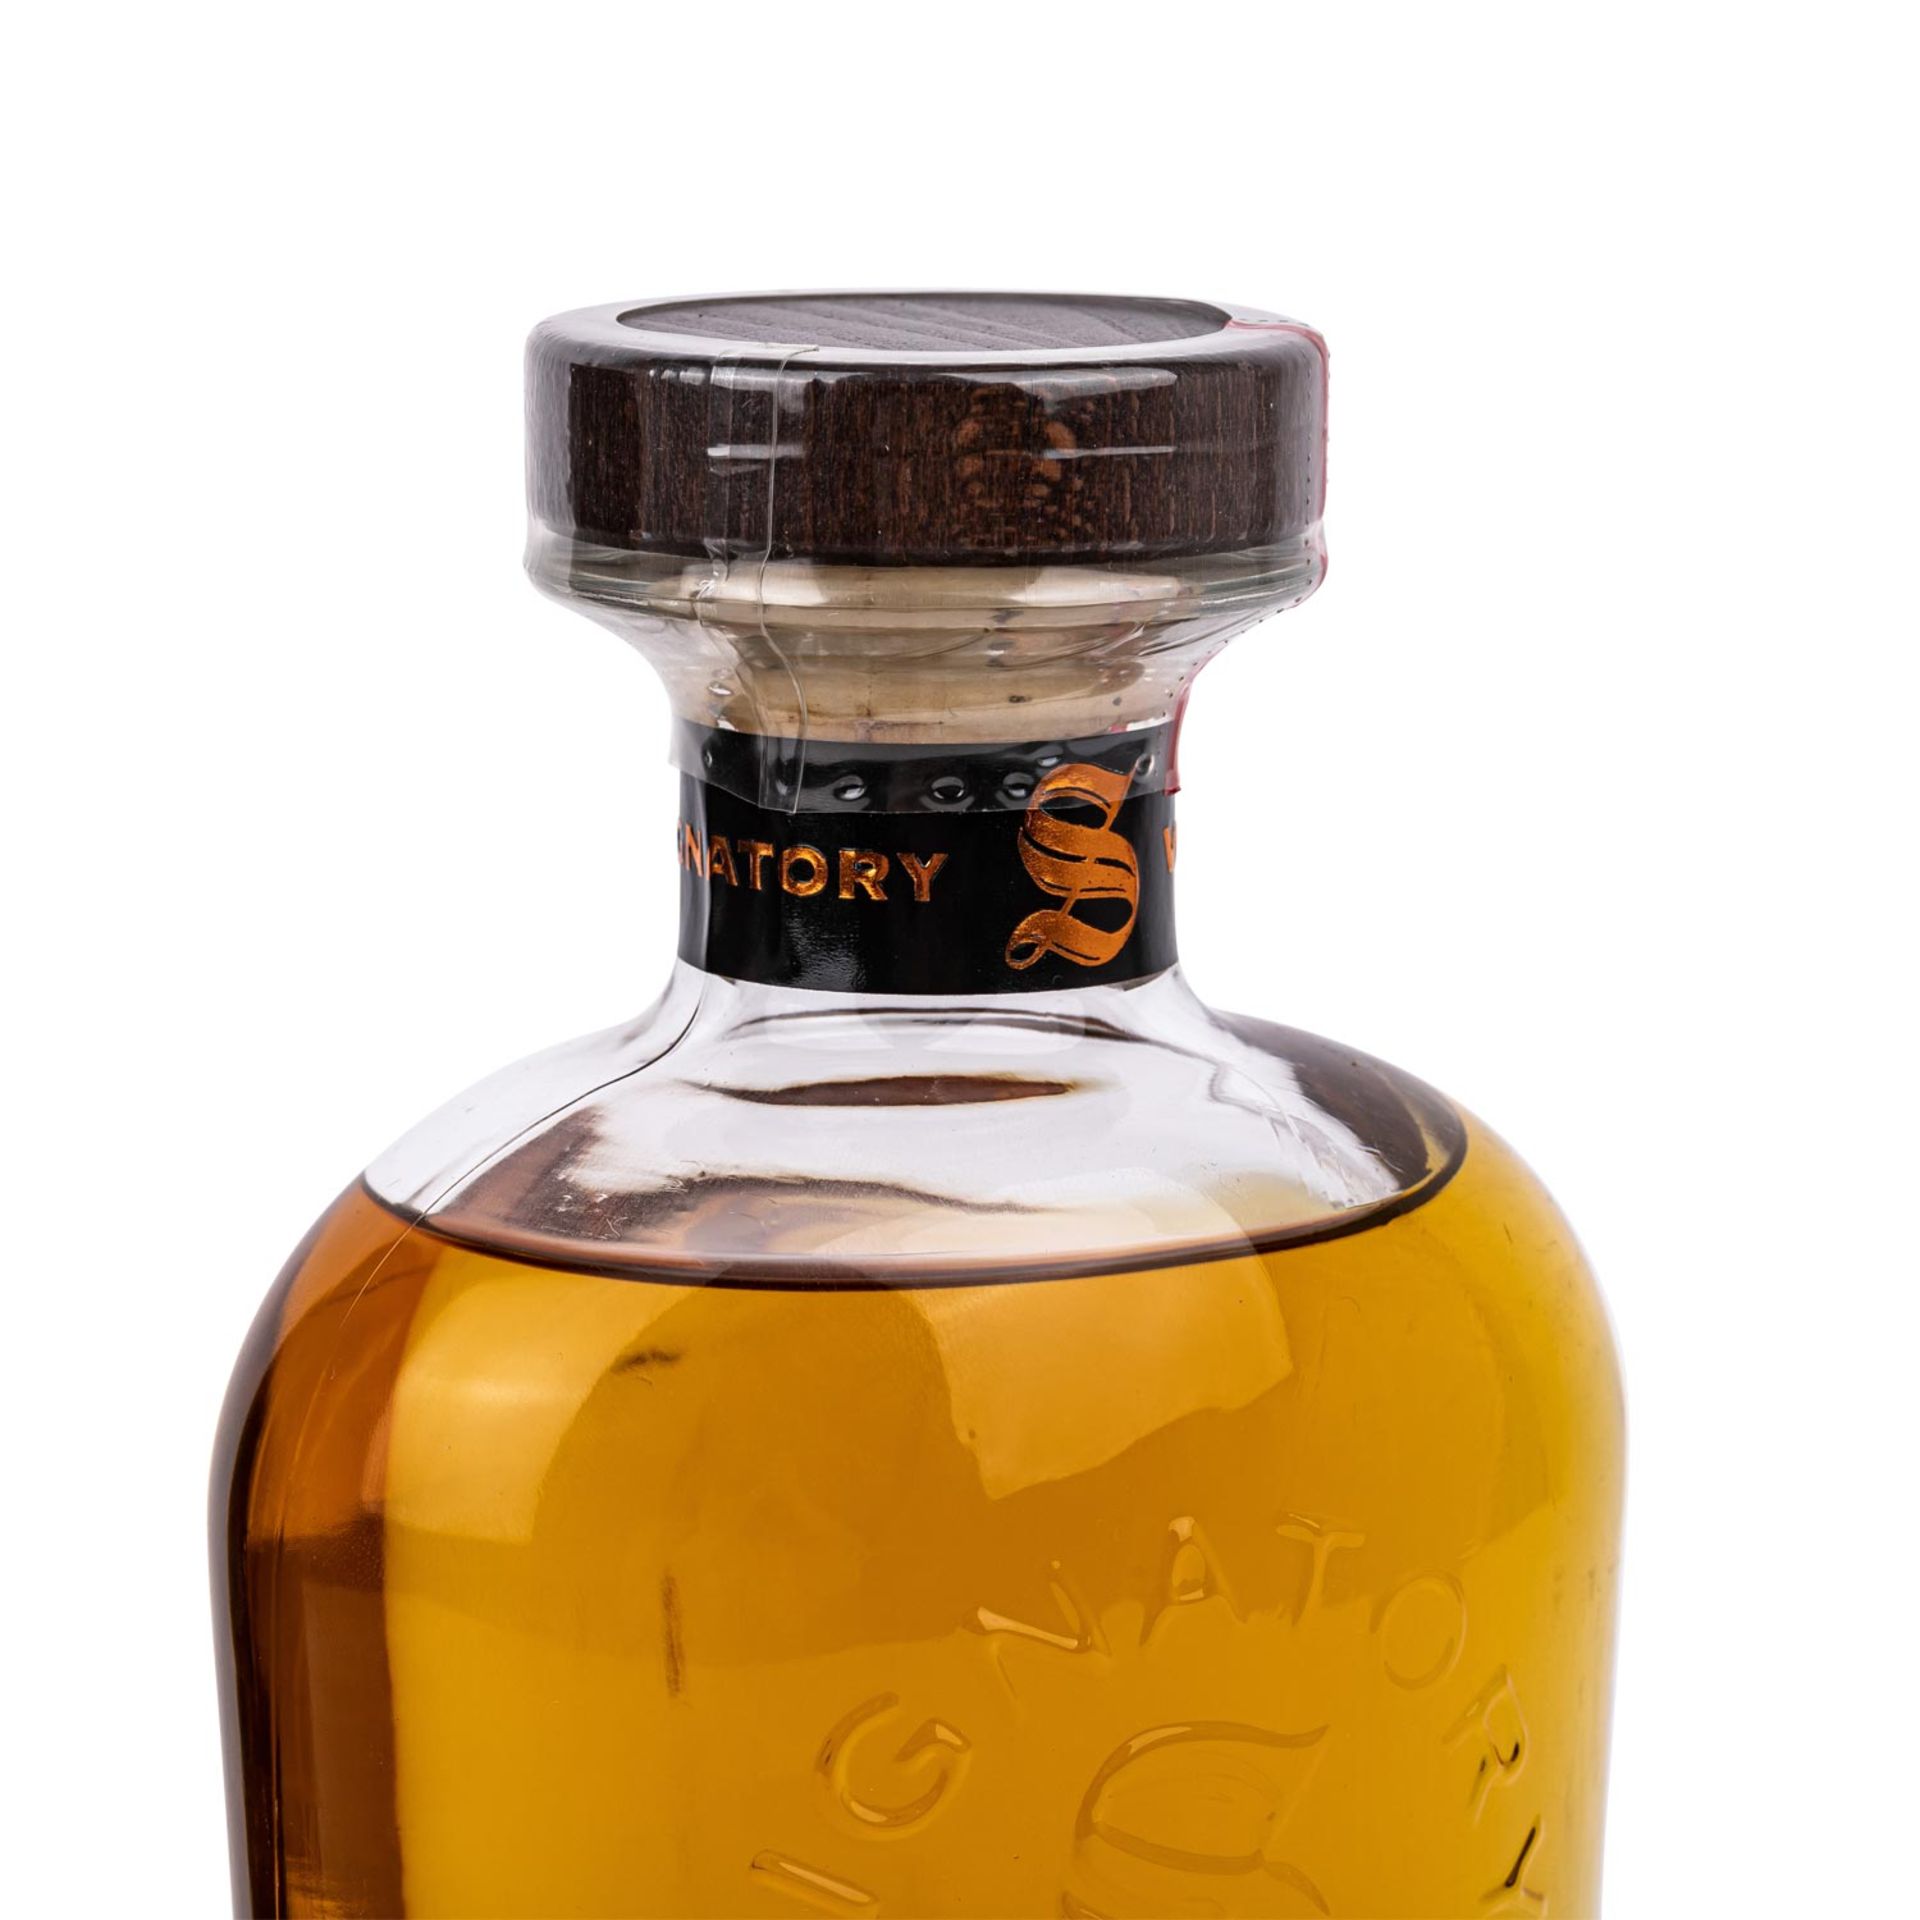 PORT ELLEN Single Malt Scotch Whisky SIGNATORY VINTAGE 1983 - Image 2 of 3